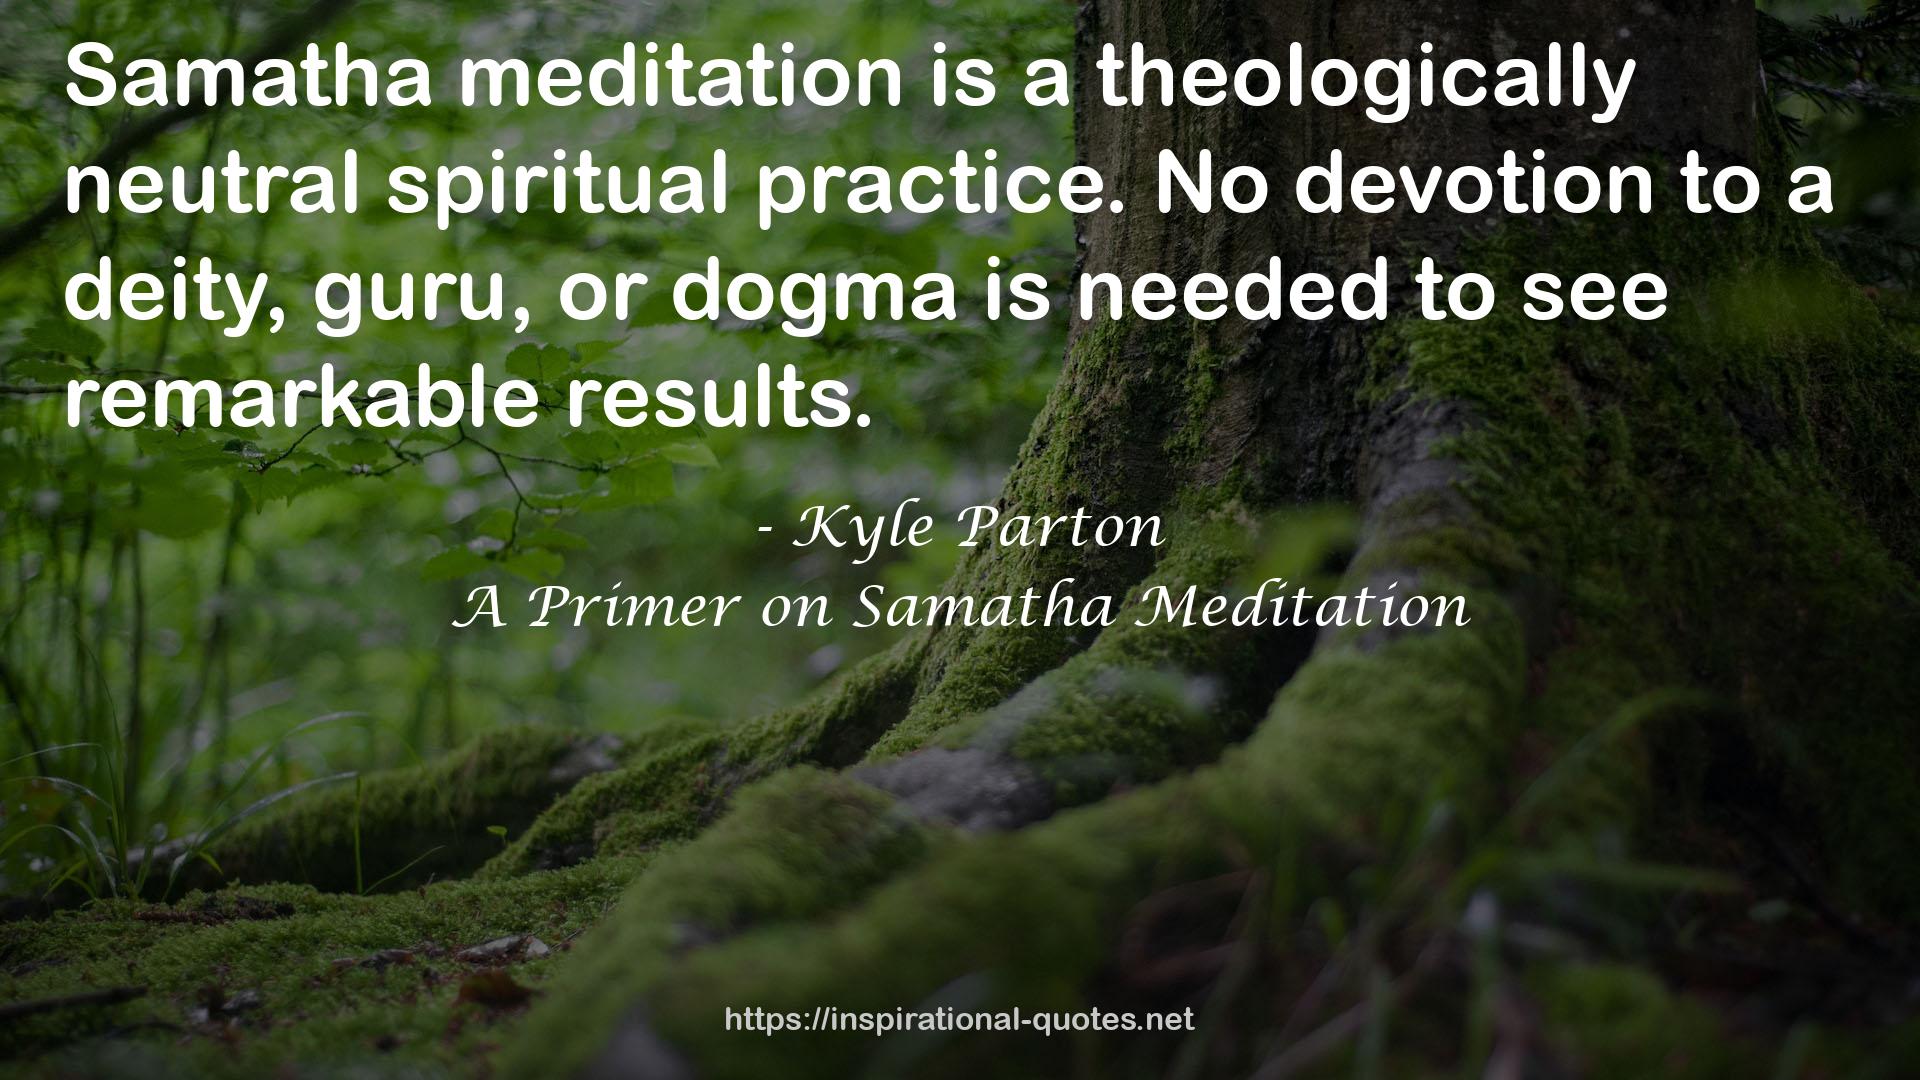 A Primer on Samatha Meditation QUOTES